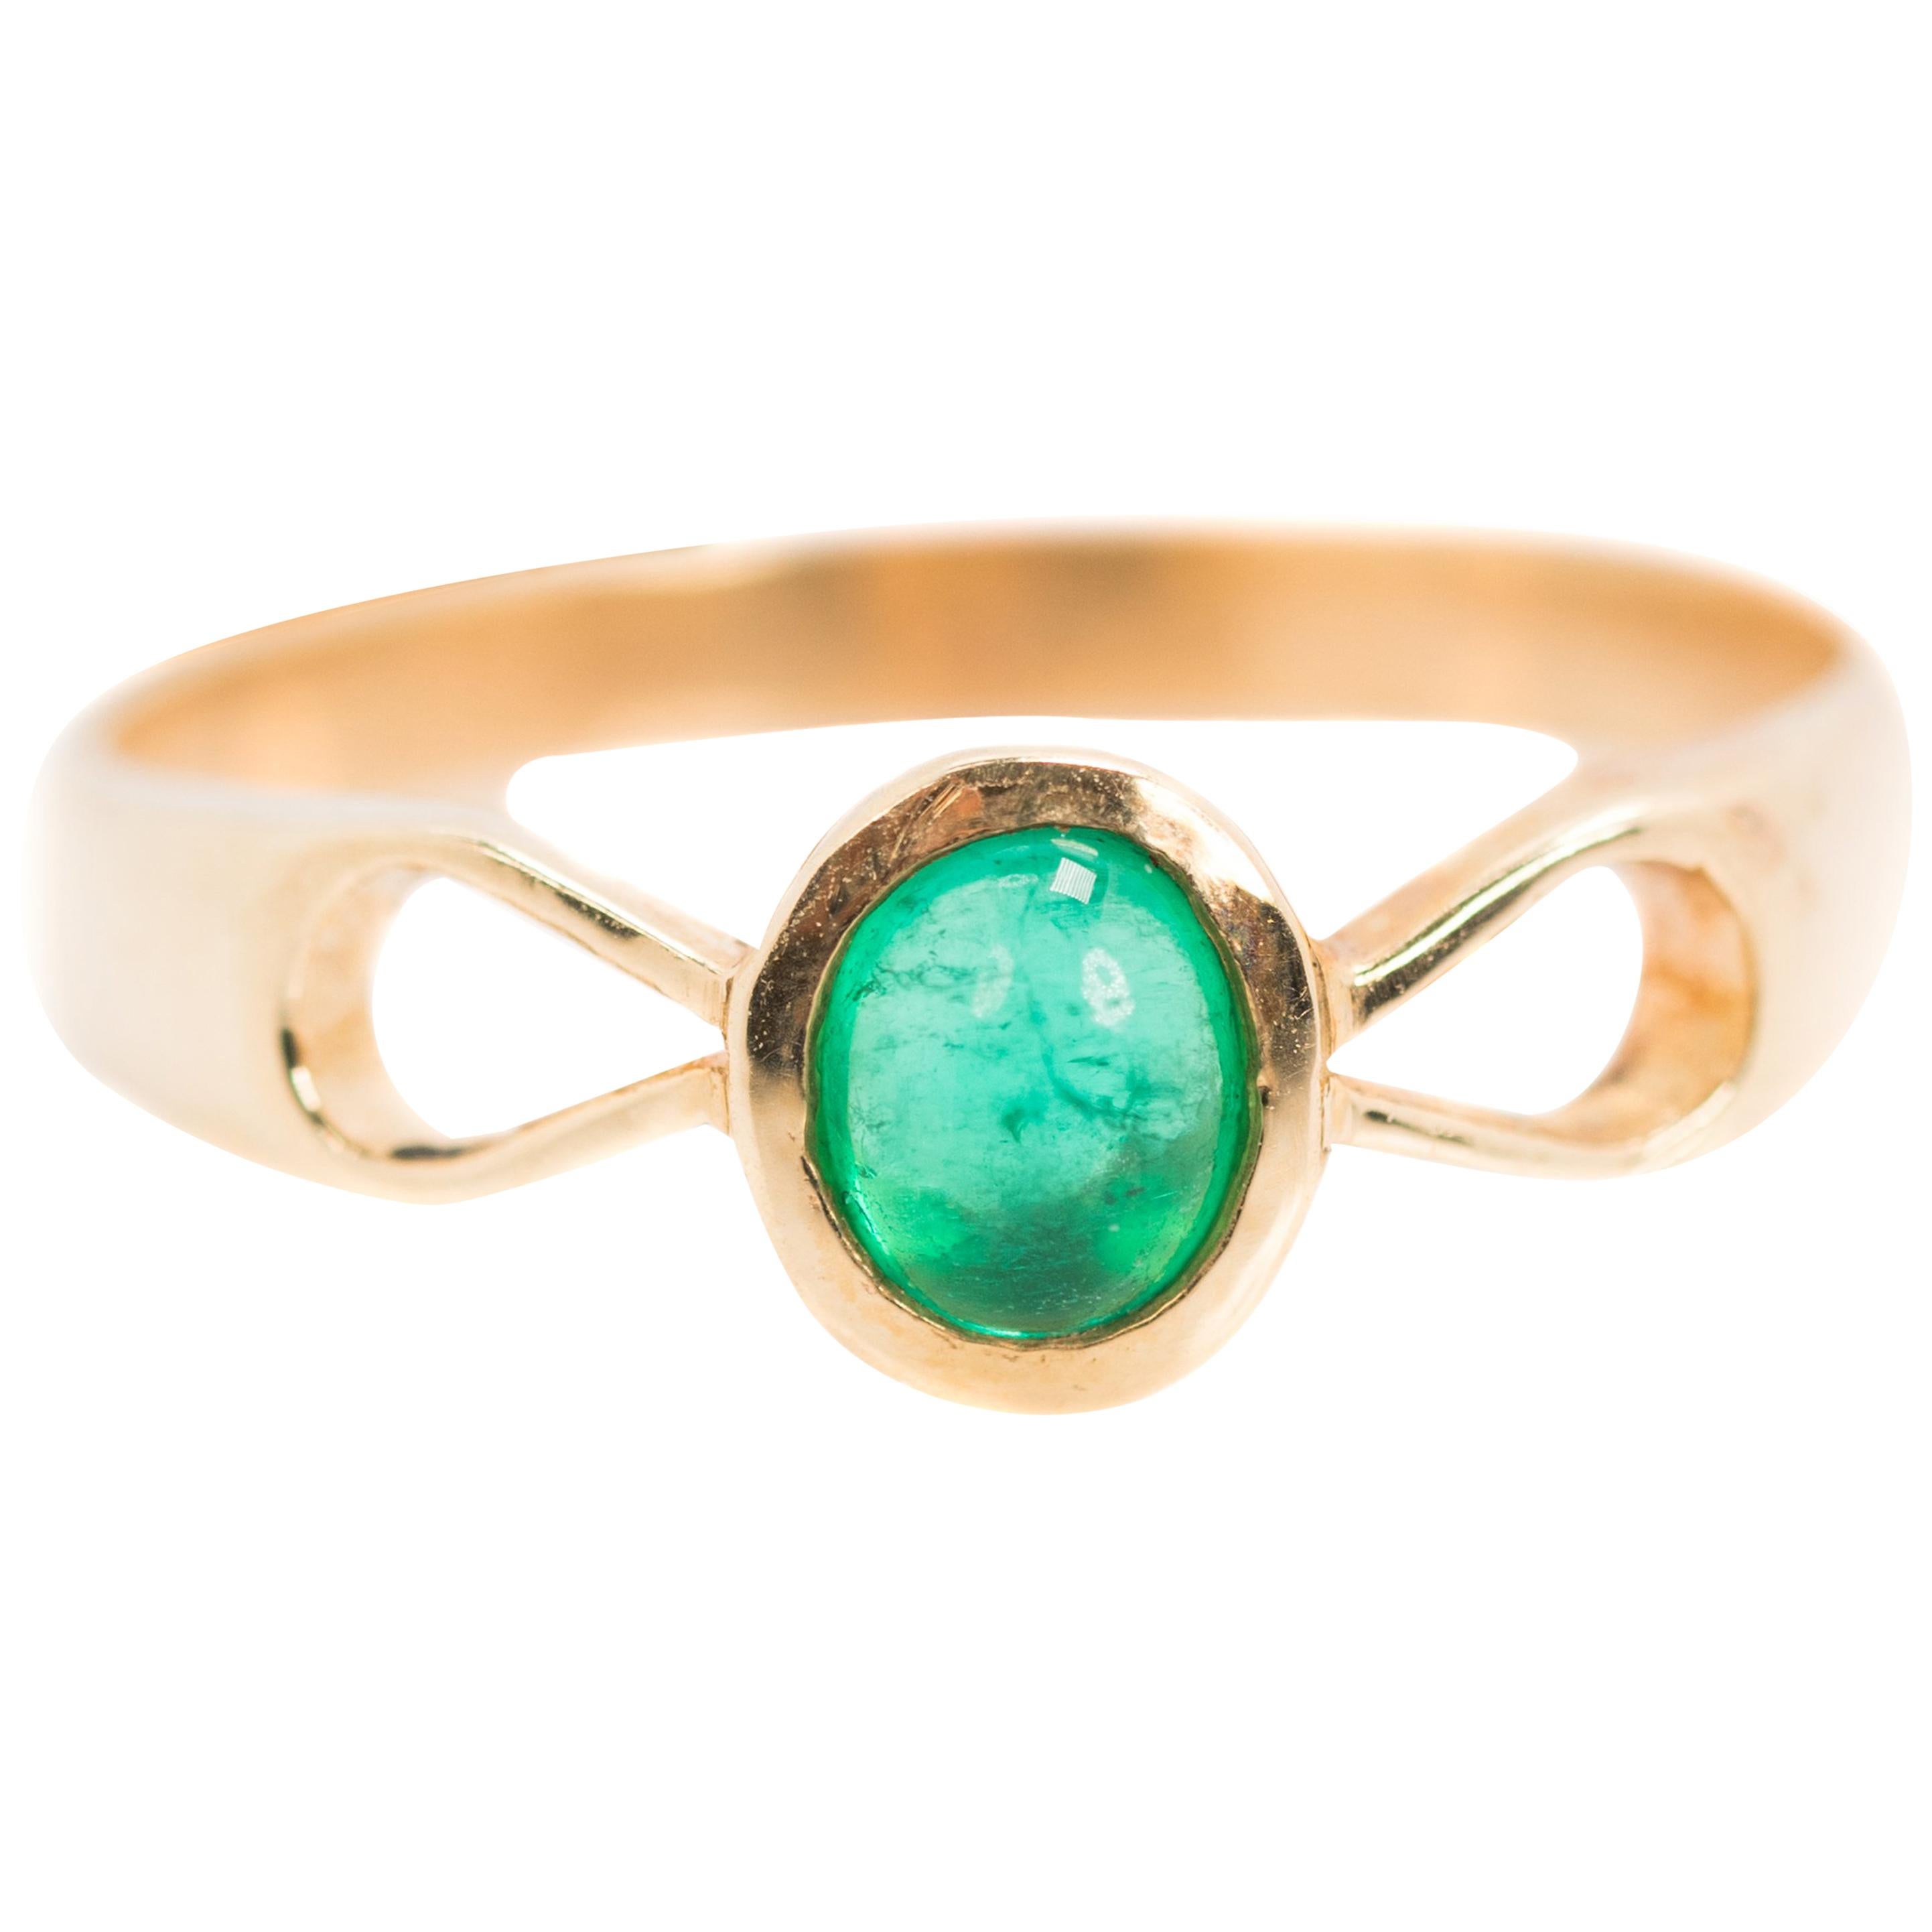 1950s 0.25 Carat Emerald and 18 Karat Yellow Gold Ring